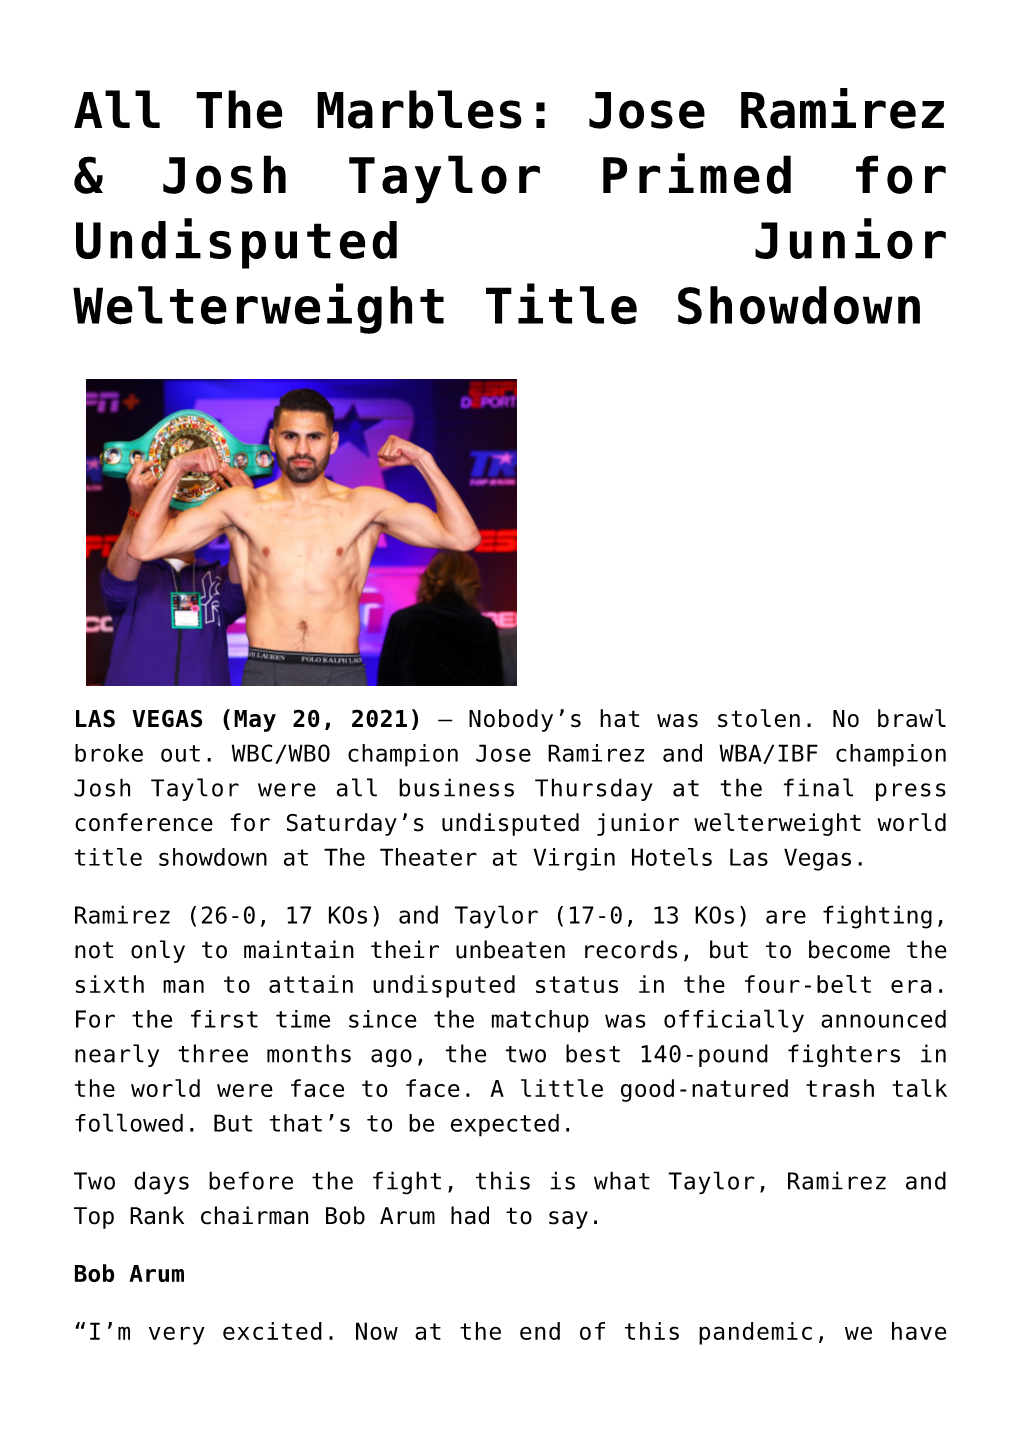 Jose Ramirez & Josh Taylor Primed for Undisputed Junior Welterweight